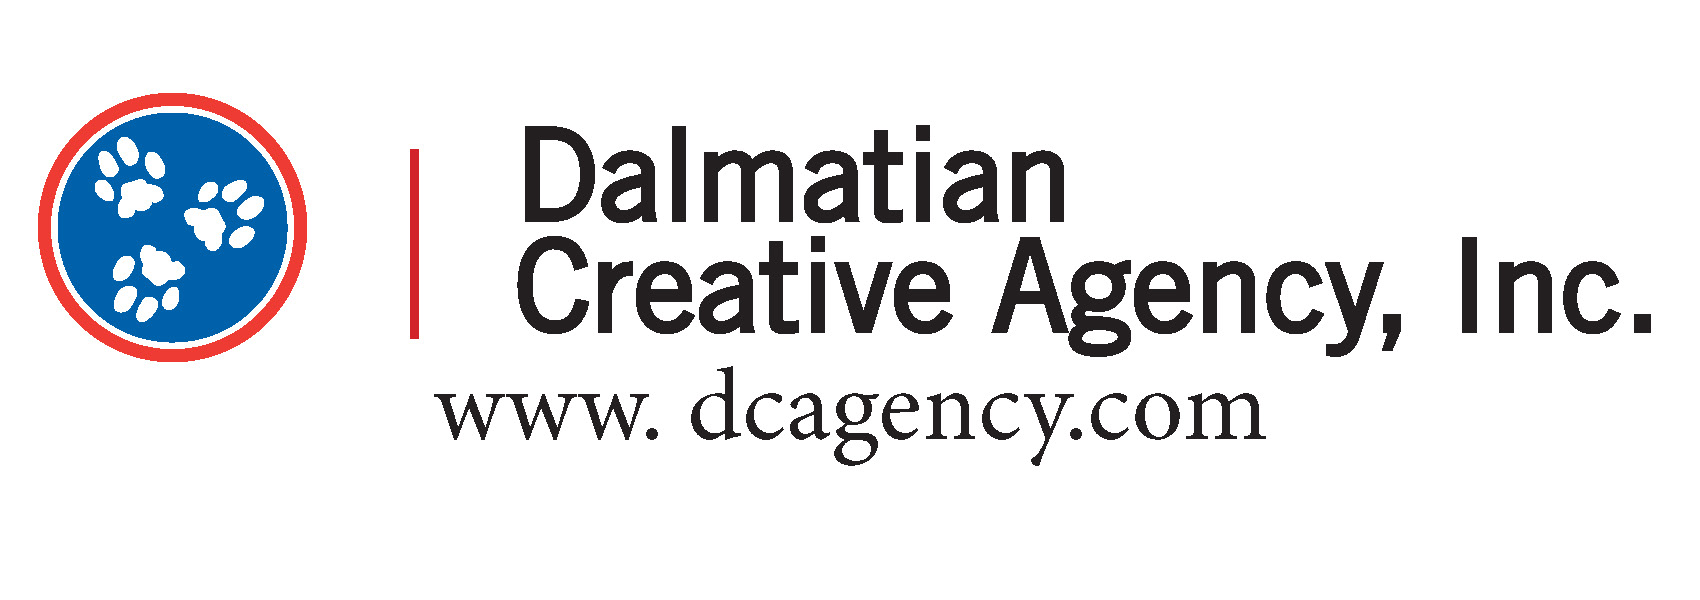 Dalmatian Creative Agency, Inc.'s Logo